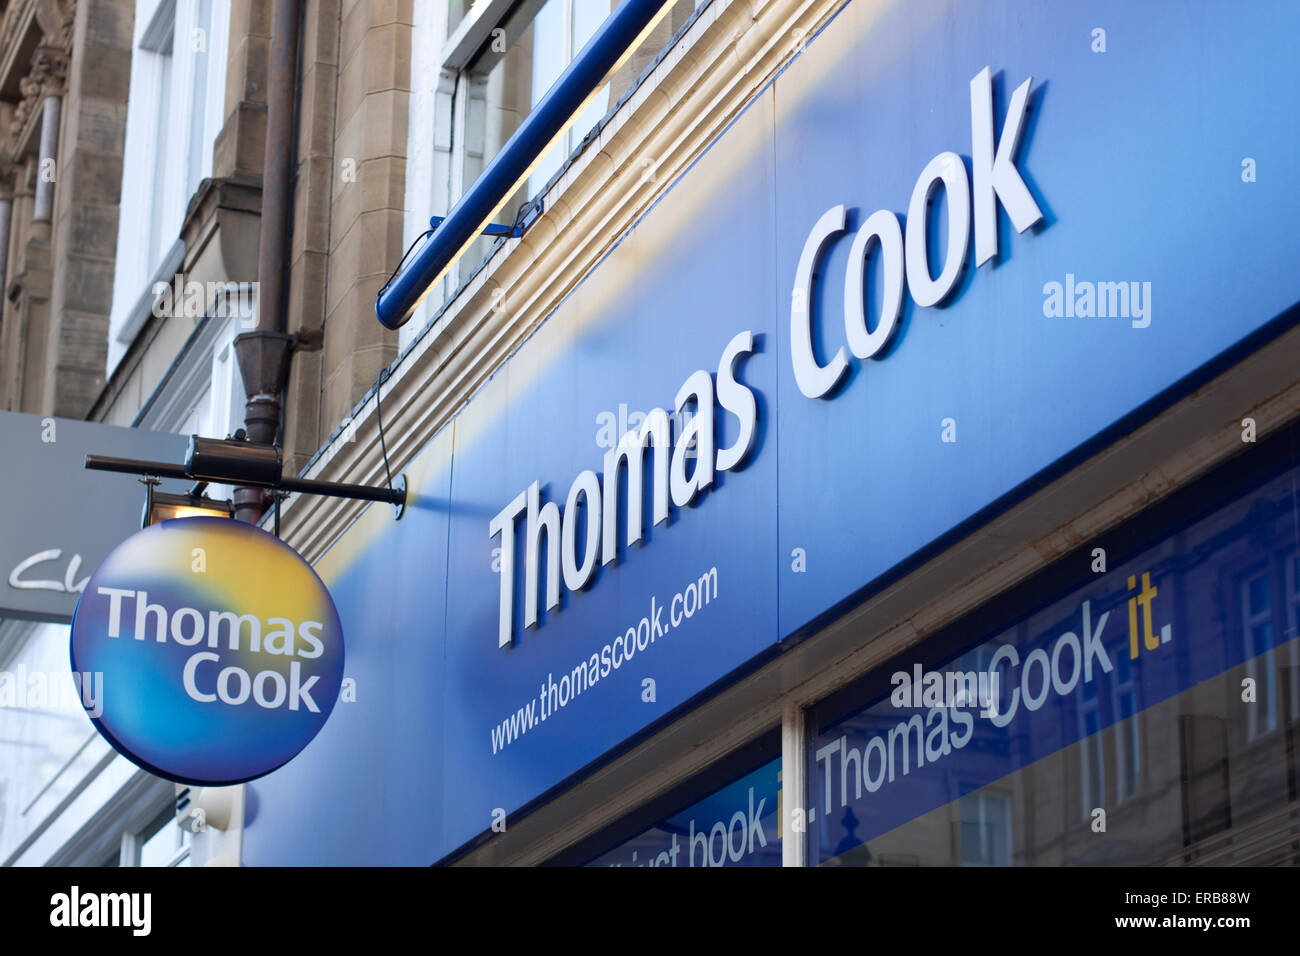 Thomas Cook shop sign Stock Photo